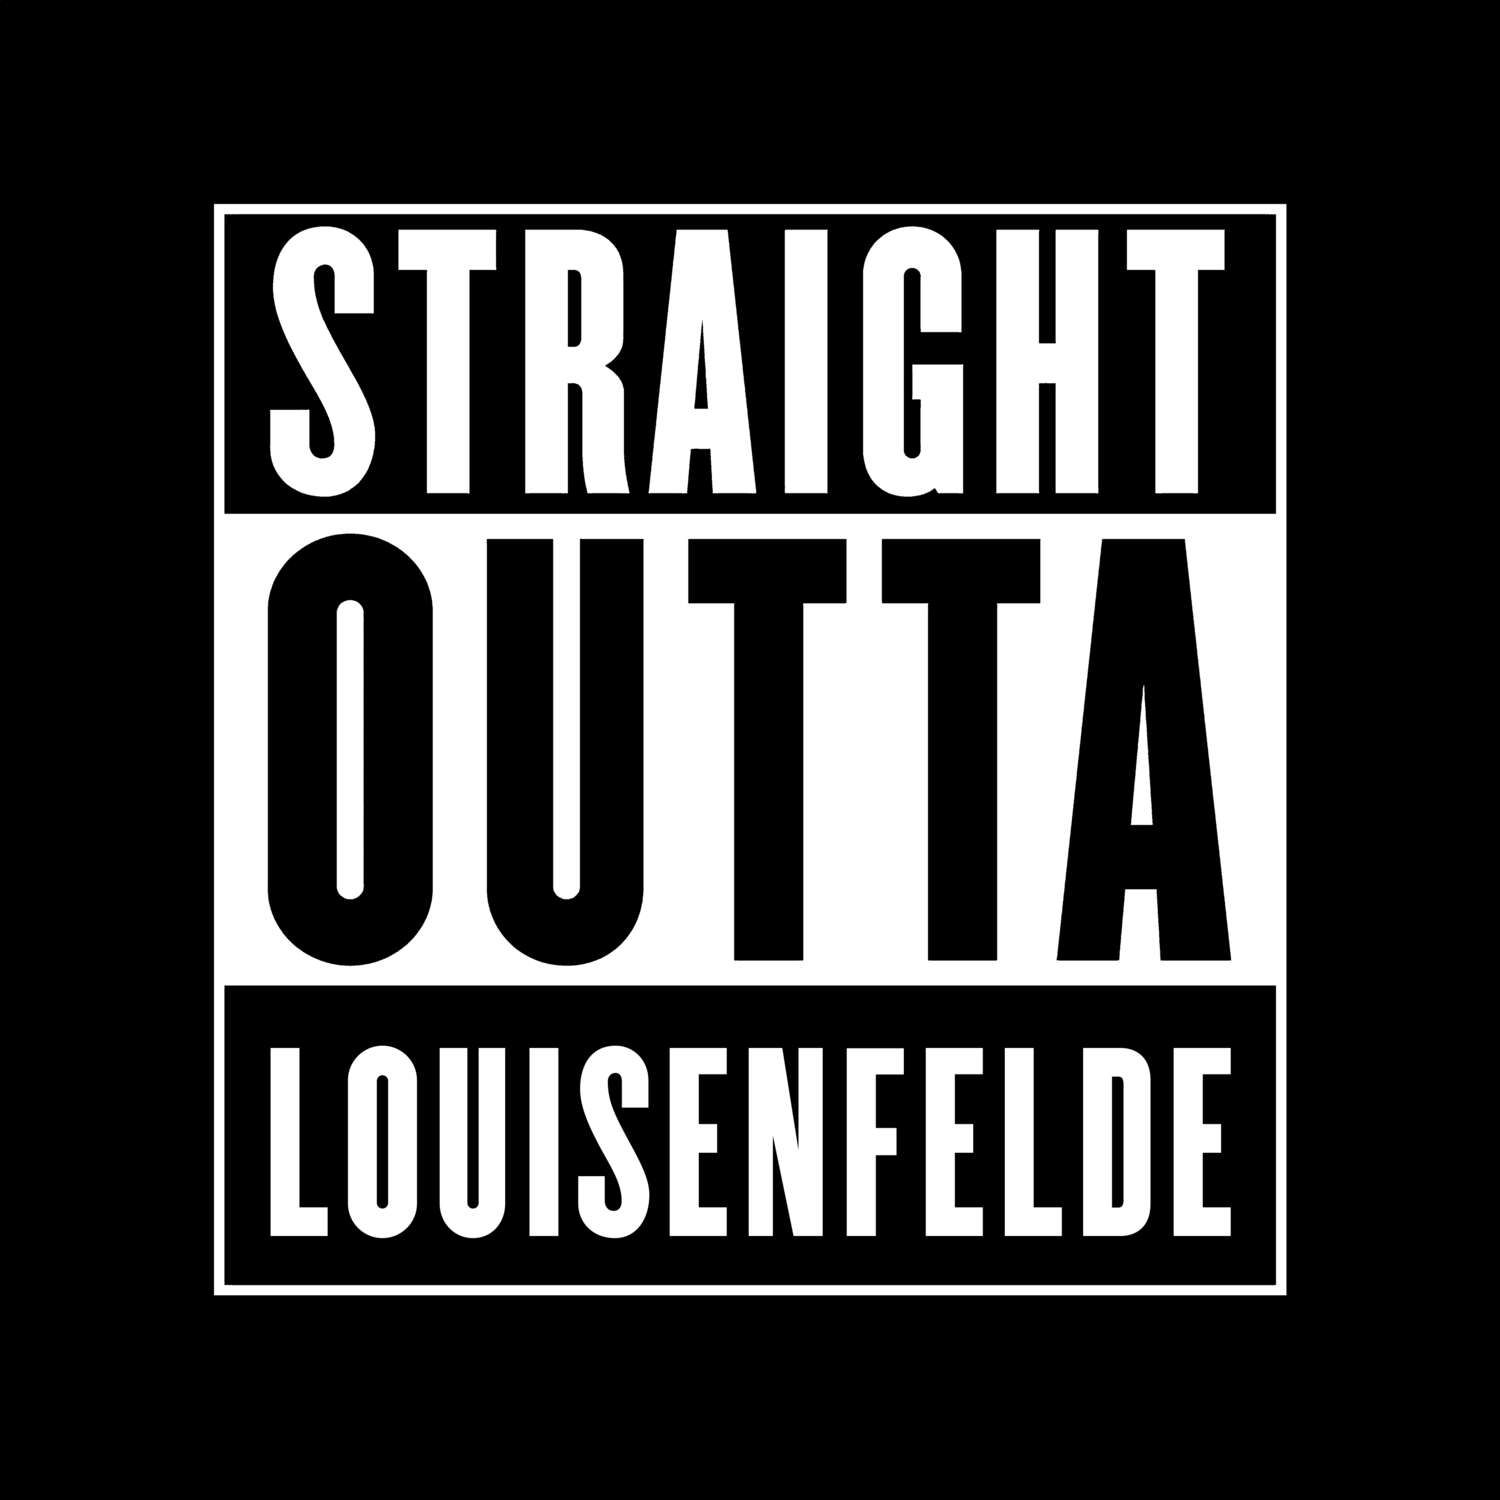 Louisenfelde T-Shirt »Straight Outta«